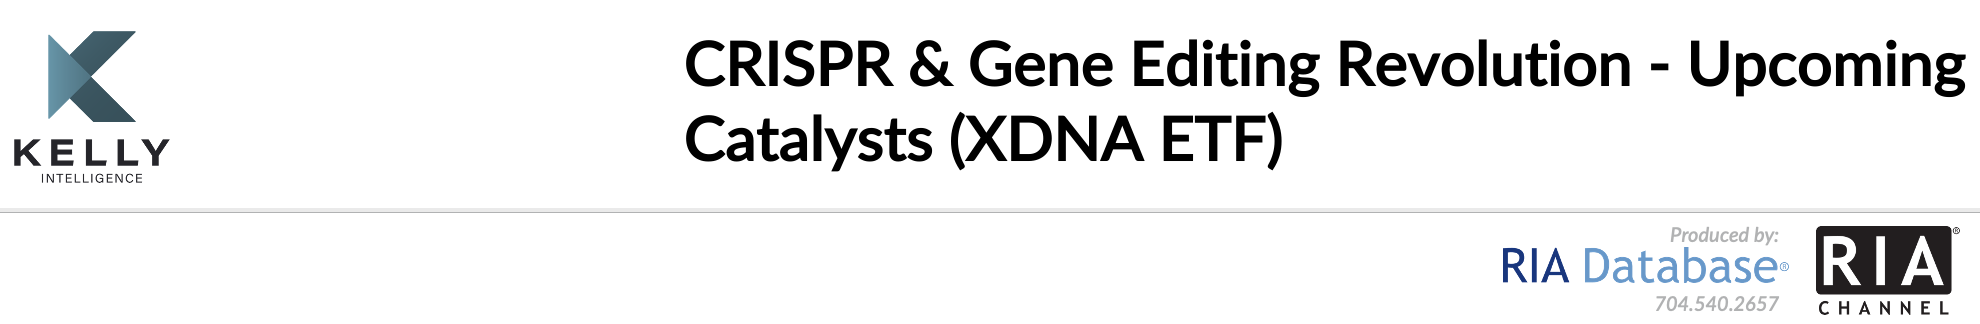 CRISPR & Gene Editing Revolution - Upcoming Catalysts (XDNA ETF)

